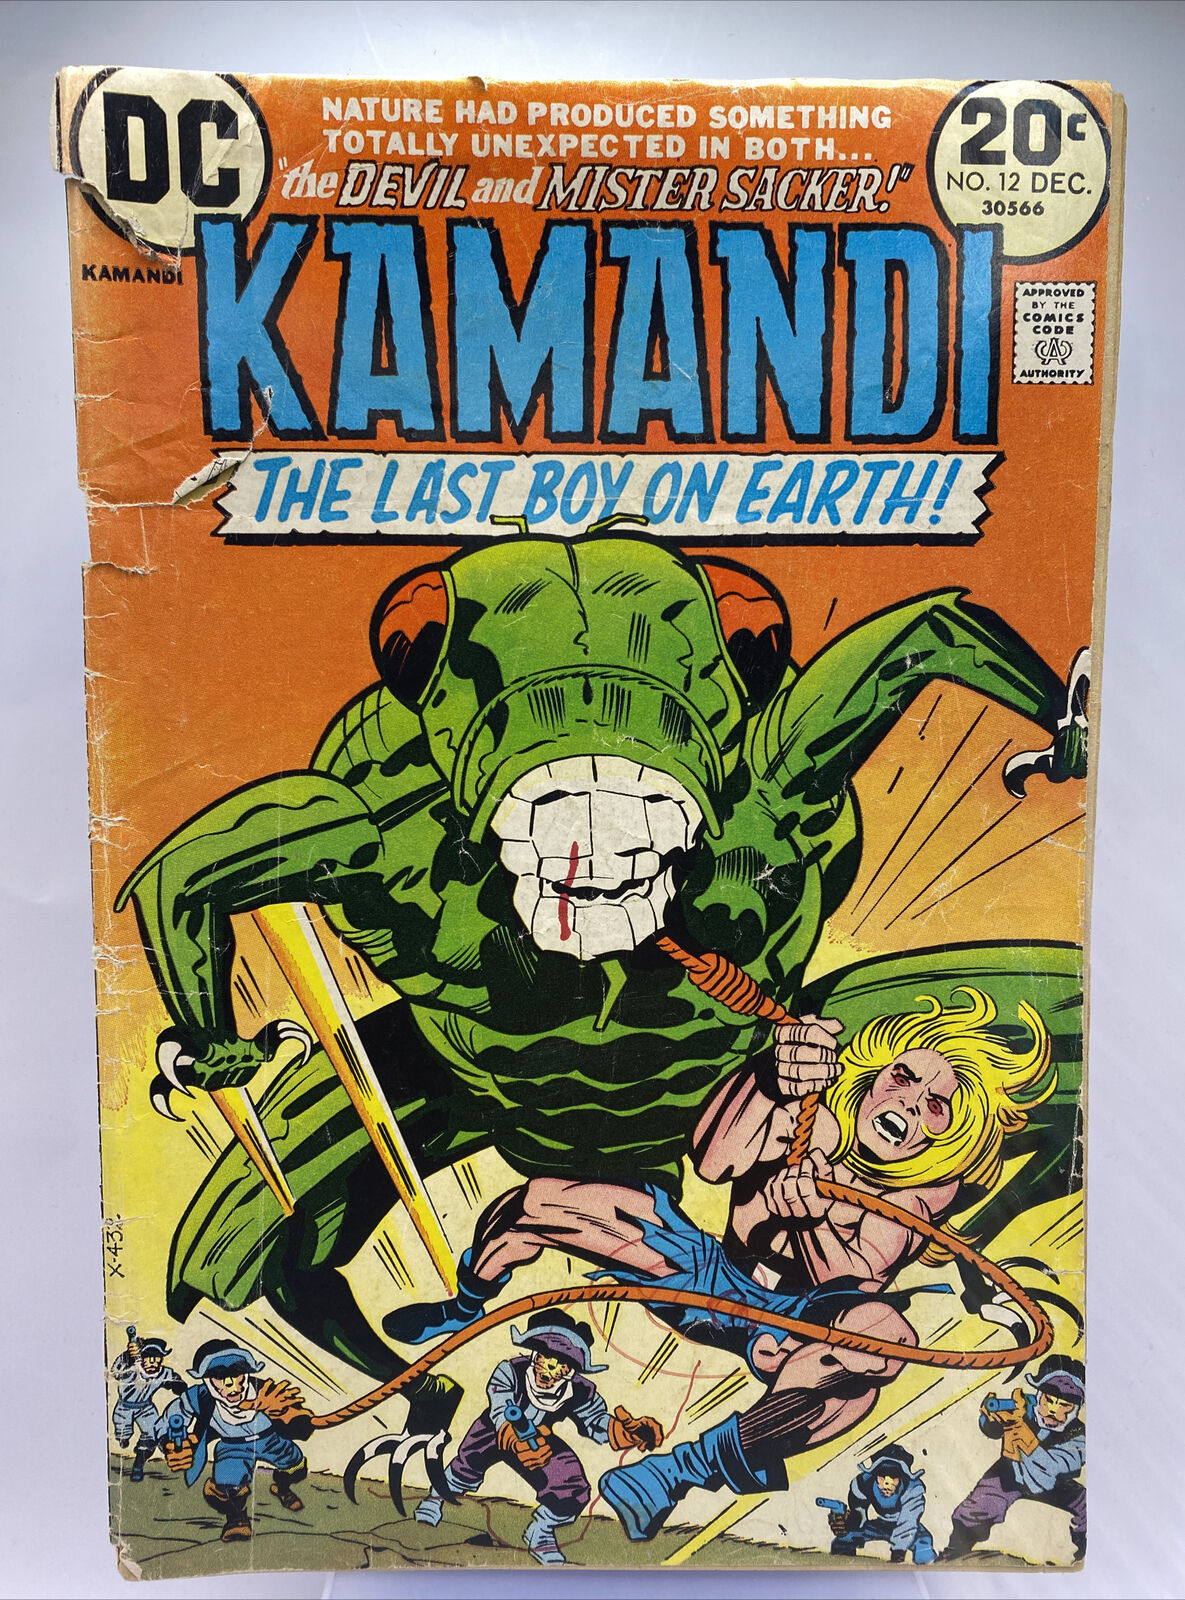 Kamandi The Last Boy On Earth Vol 2 No. 12 Dec 1973 Vintage Comic Book